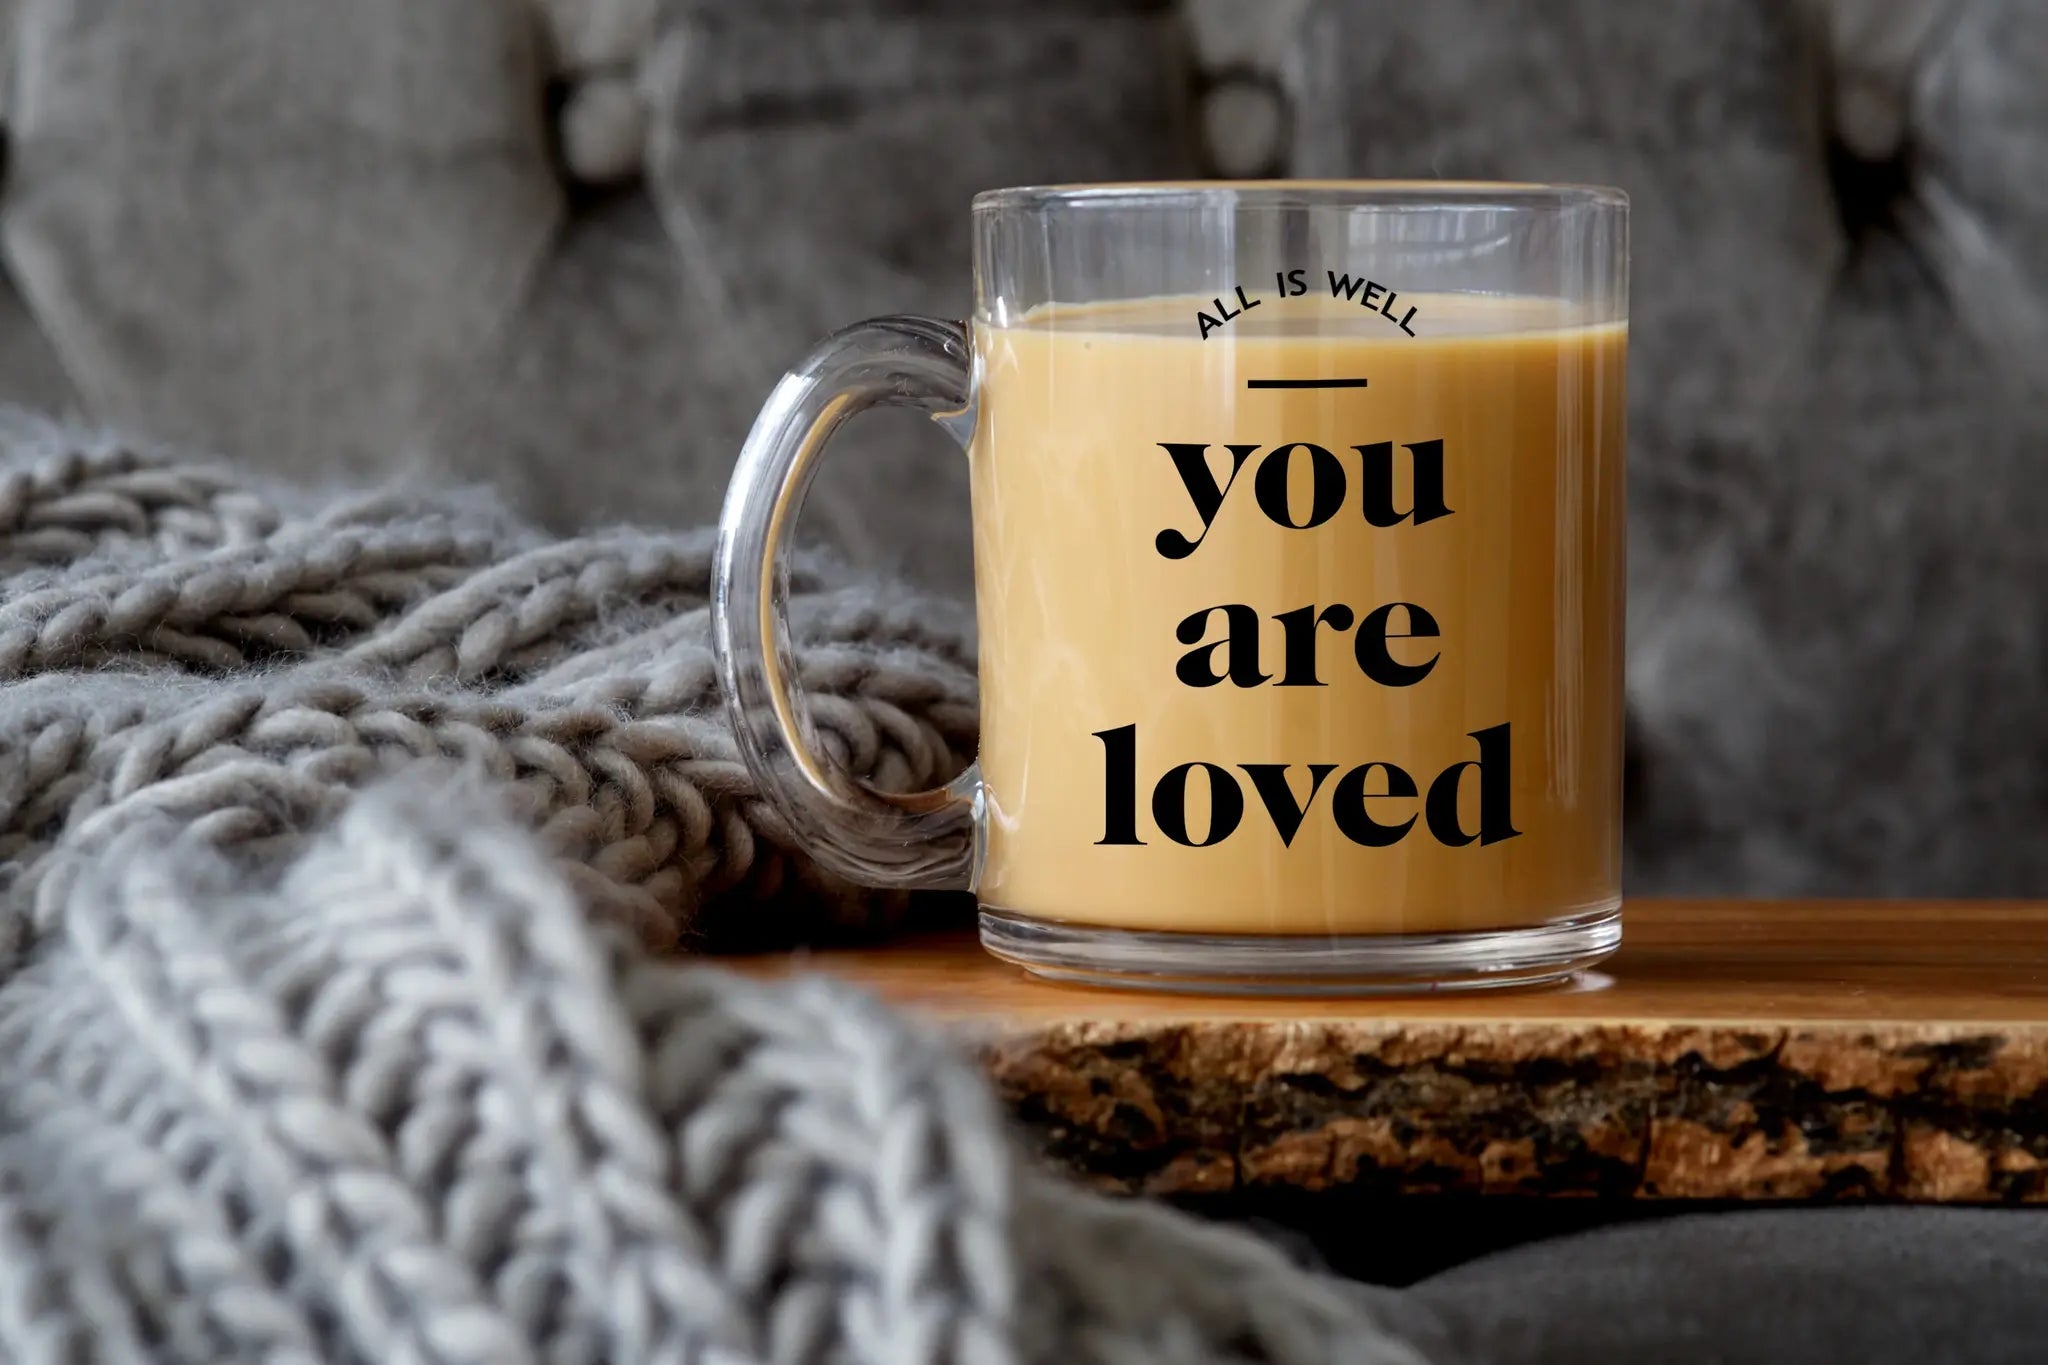 You are loved glass mug